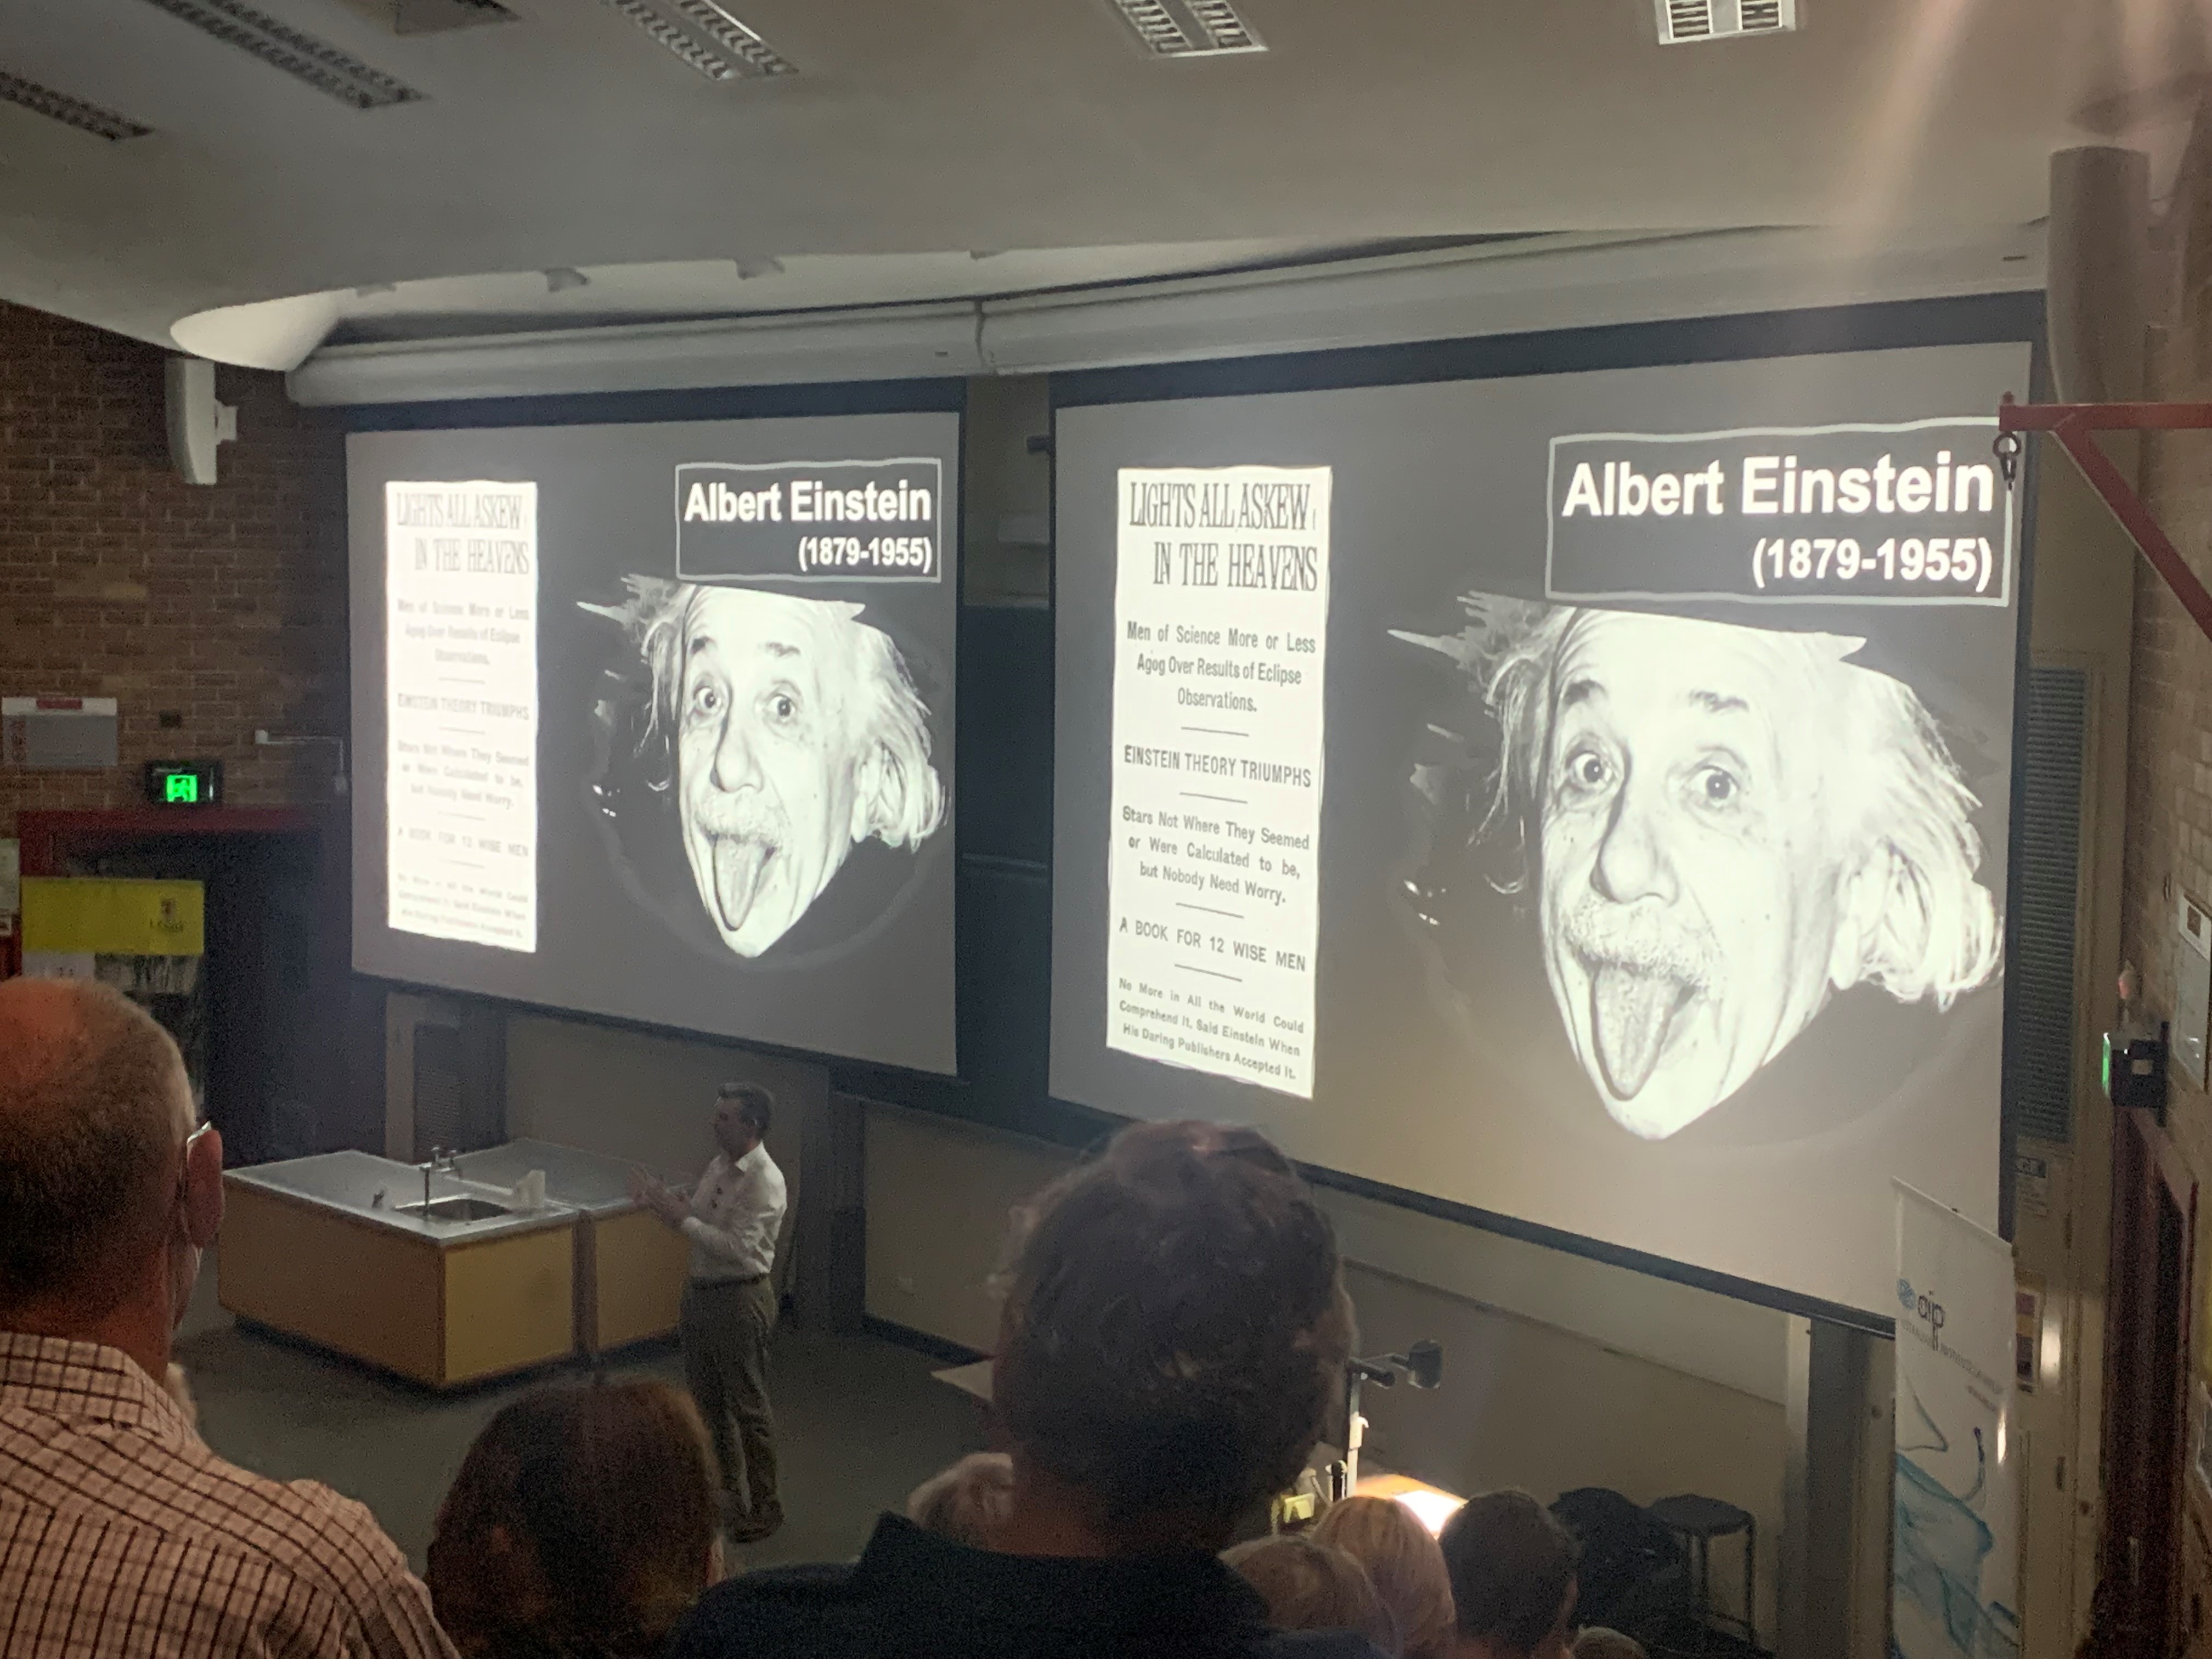 Lecture theatre with Einstein slides on screens